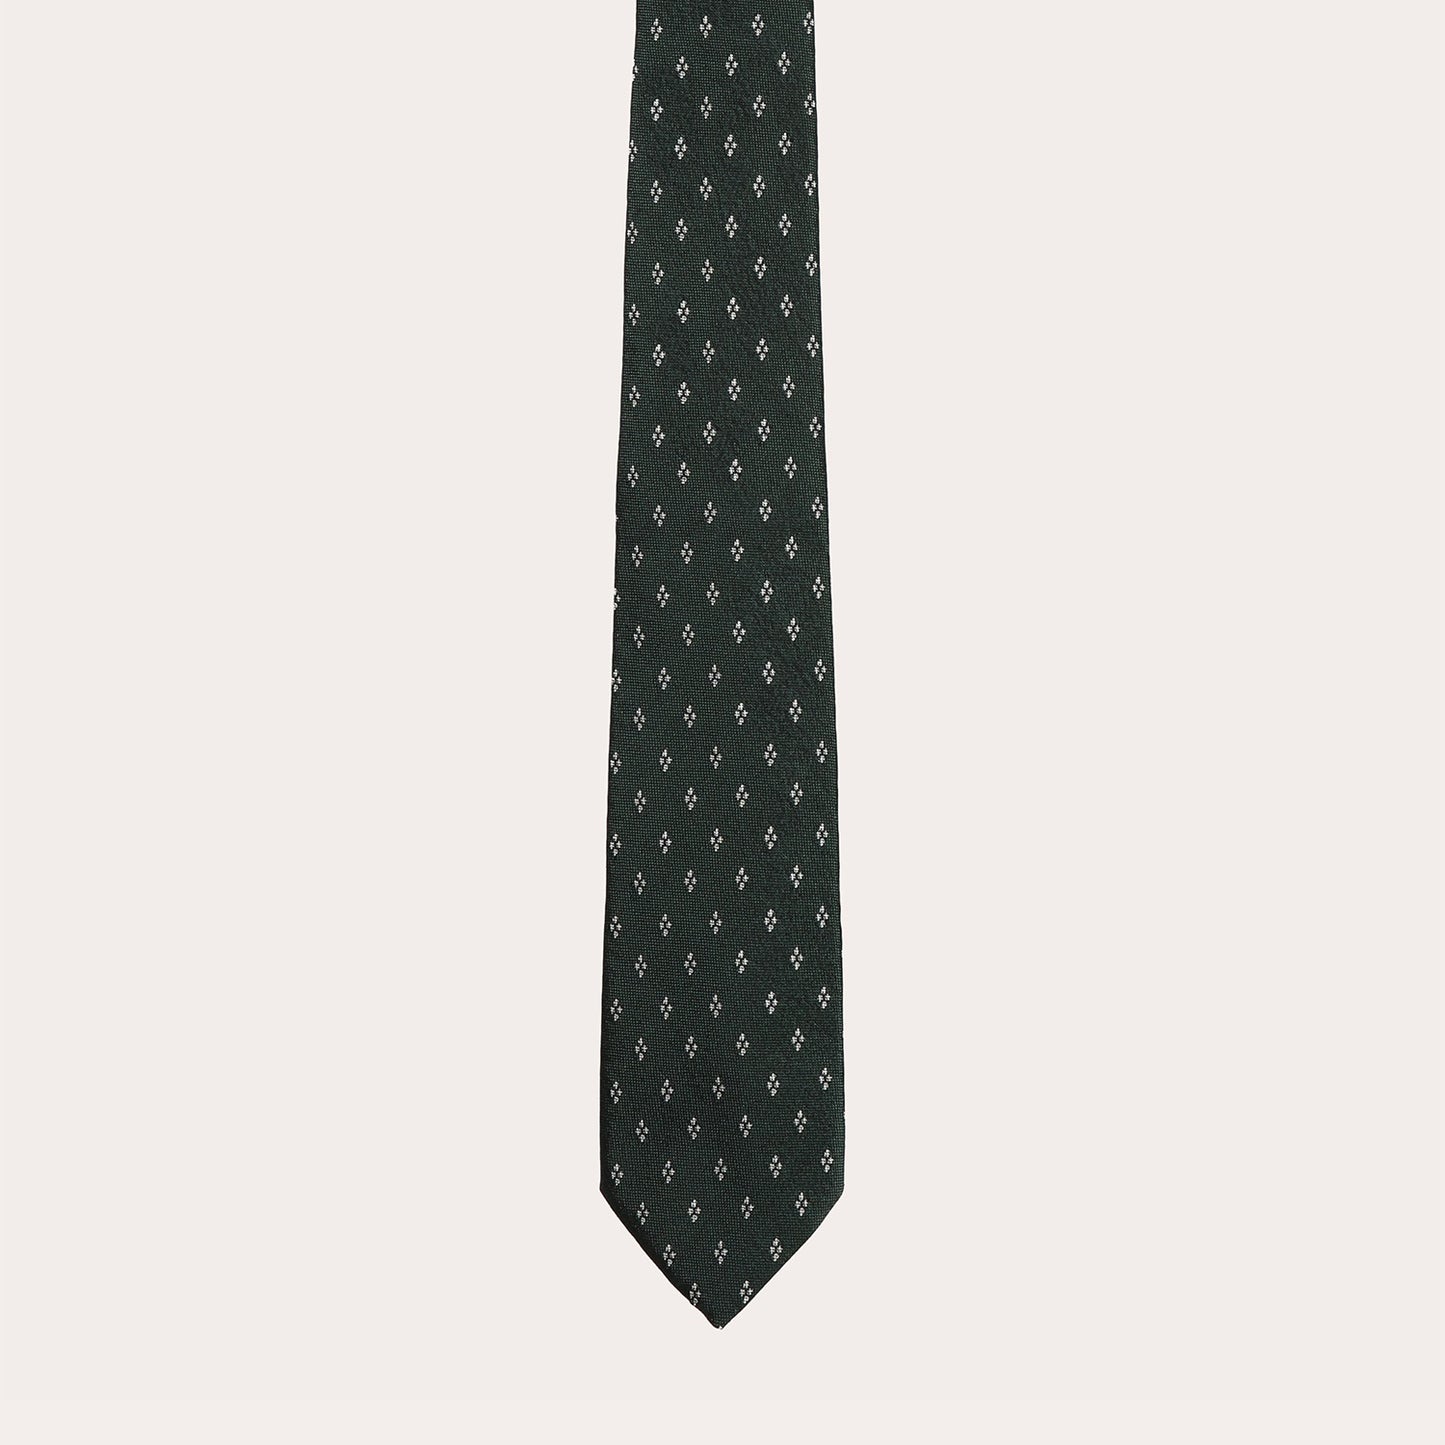 Green patterned tie